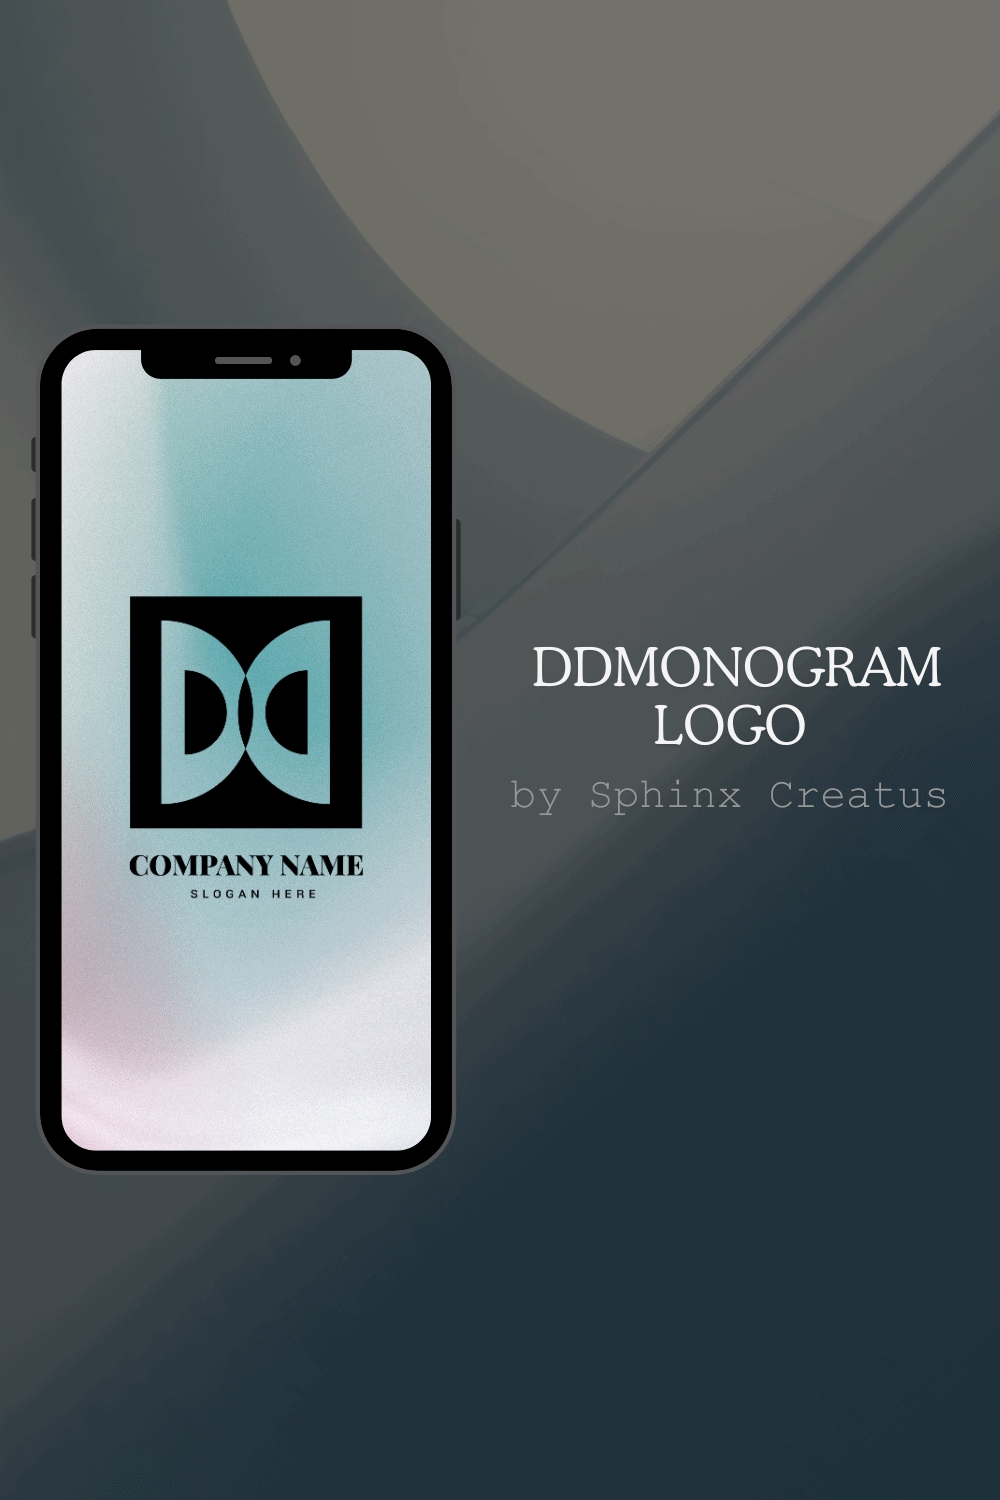 DD Monogram Logo [Sphinx Creatus] pinterest preview image.